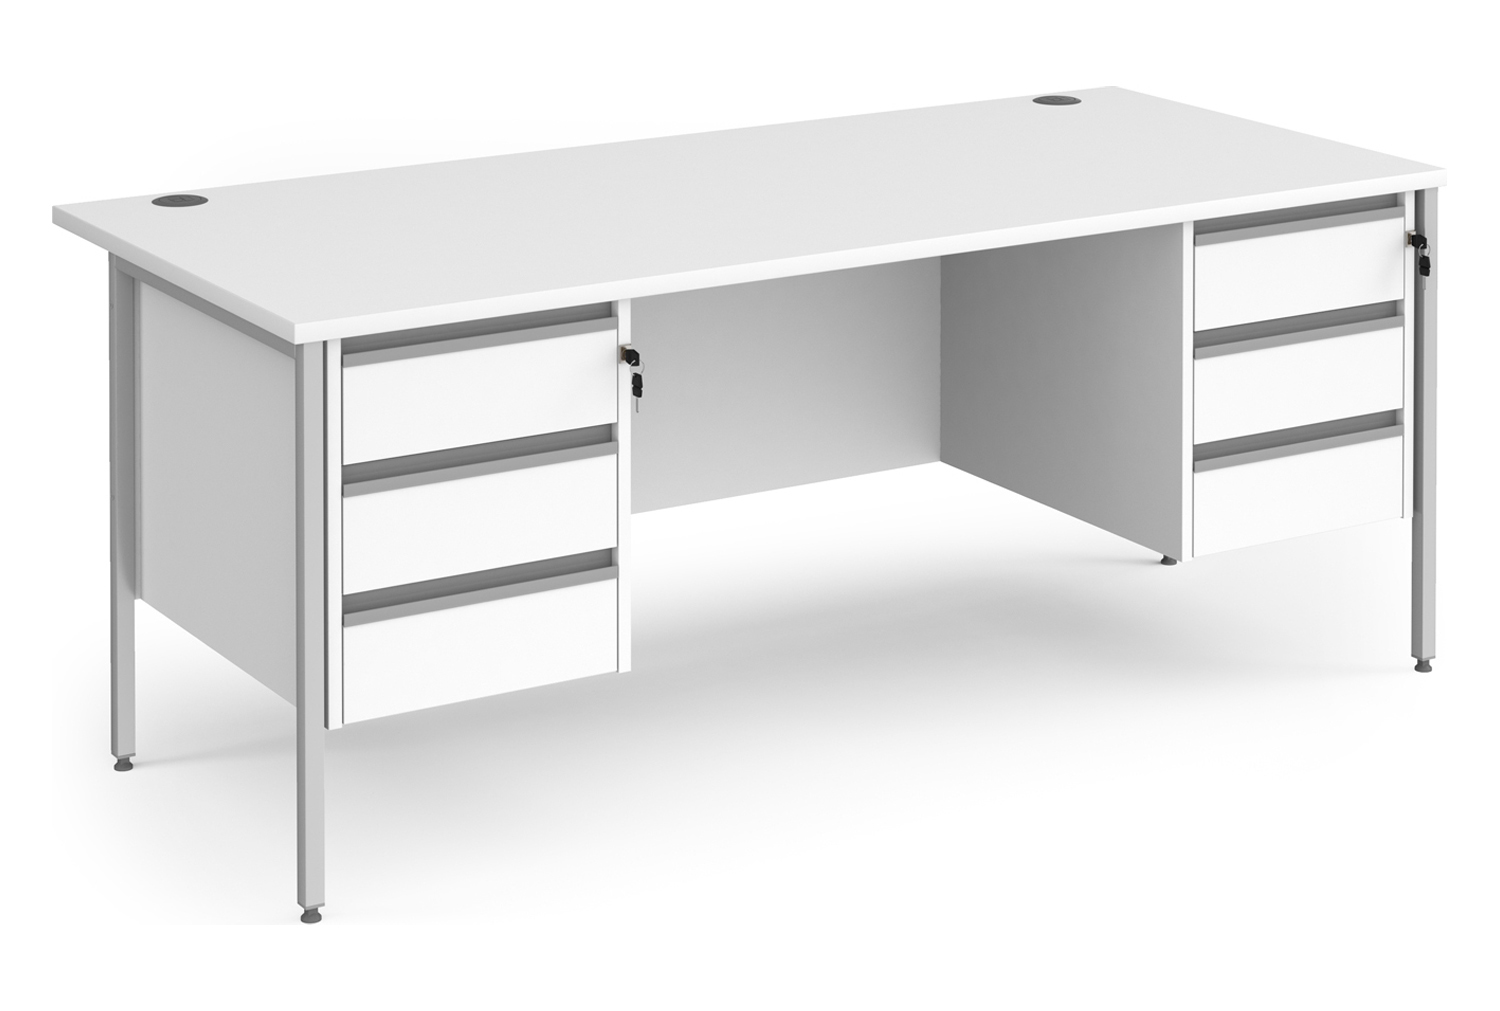 Value Line Classic+ Rectangular H-Leg Office Desk 3+3 Drawers (Silver Leg), 160wx80dx73h (cm), White